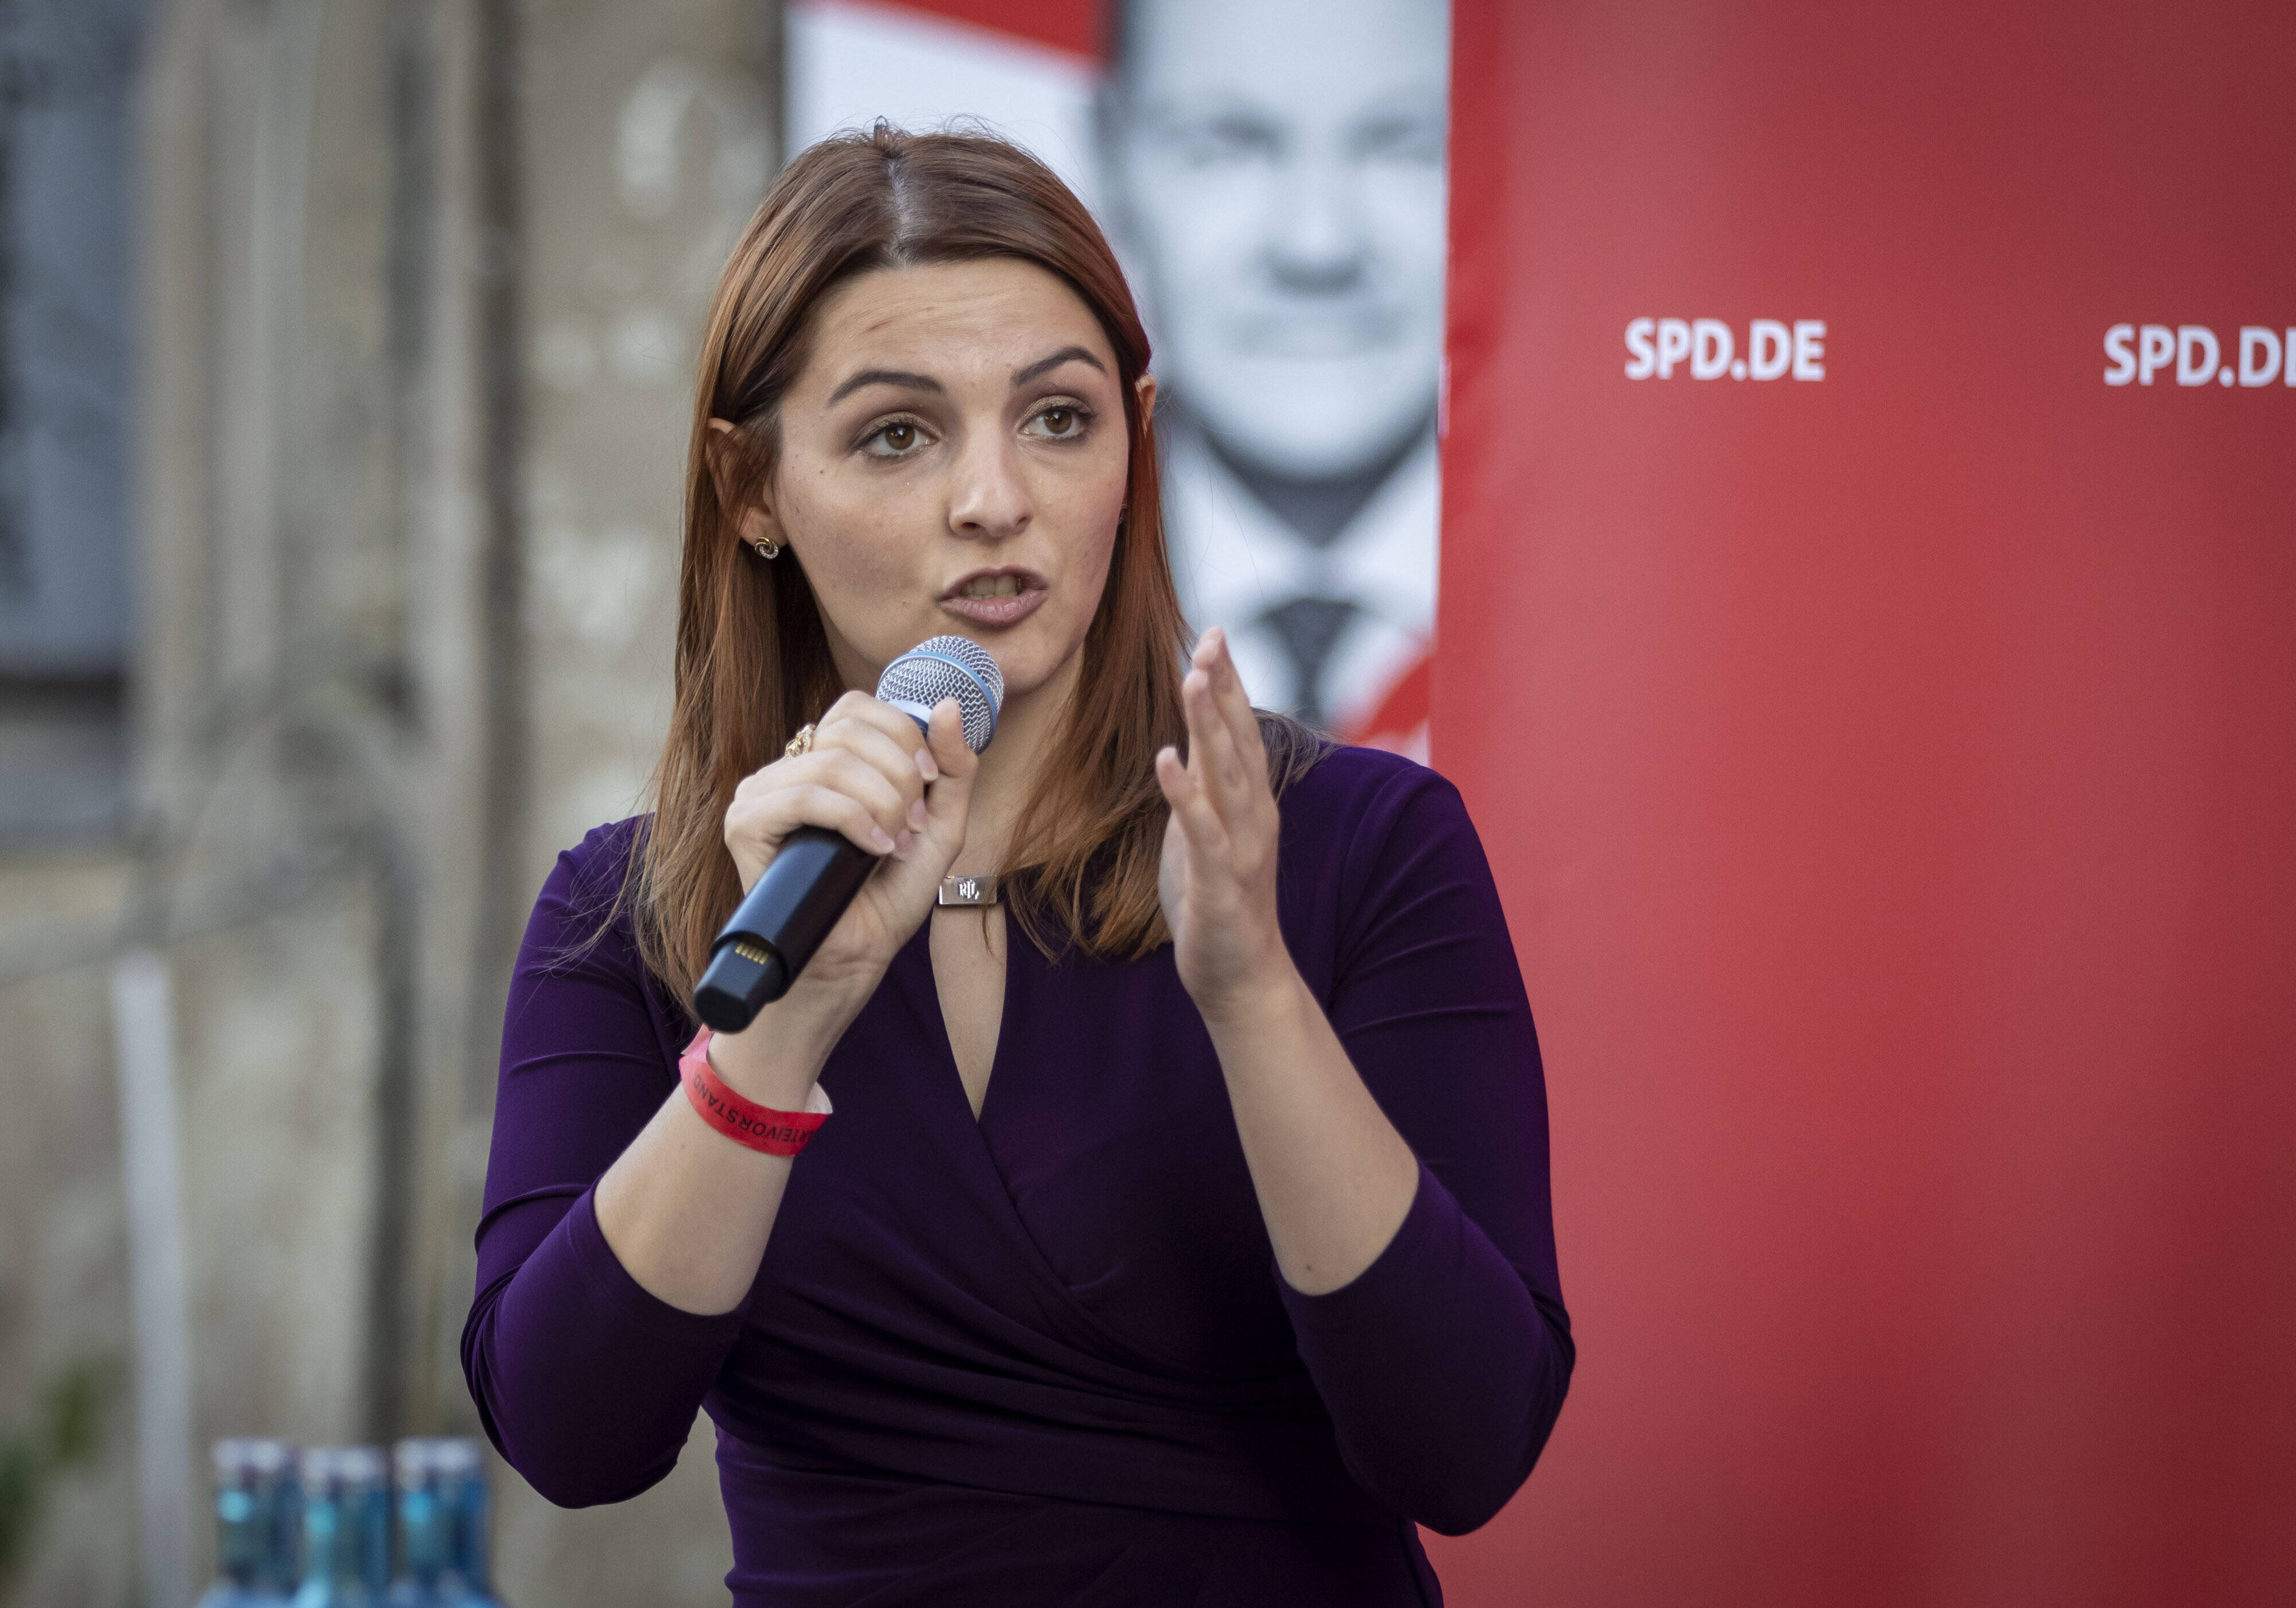 Ana-Maria Trăsnea im Bundestagswahlkampf 2021